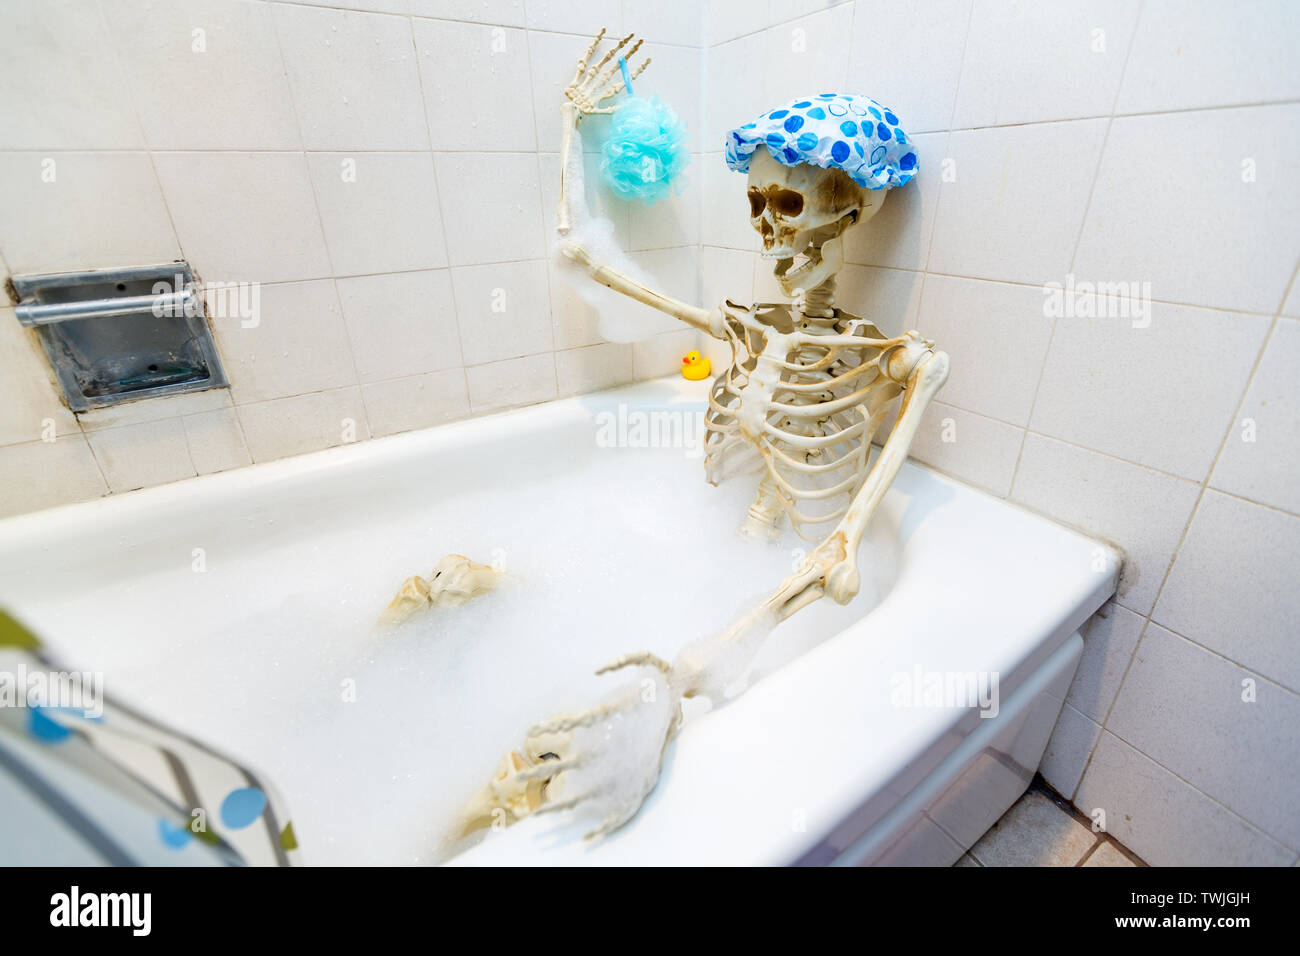 bony-skeleton-taking-a-bubble-bath-in-a-grungy-off-white-dirty-tub-TWJGJH.jpg